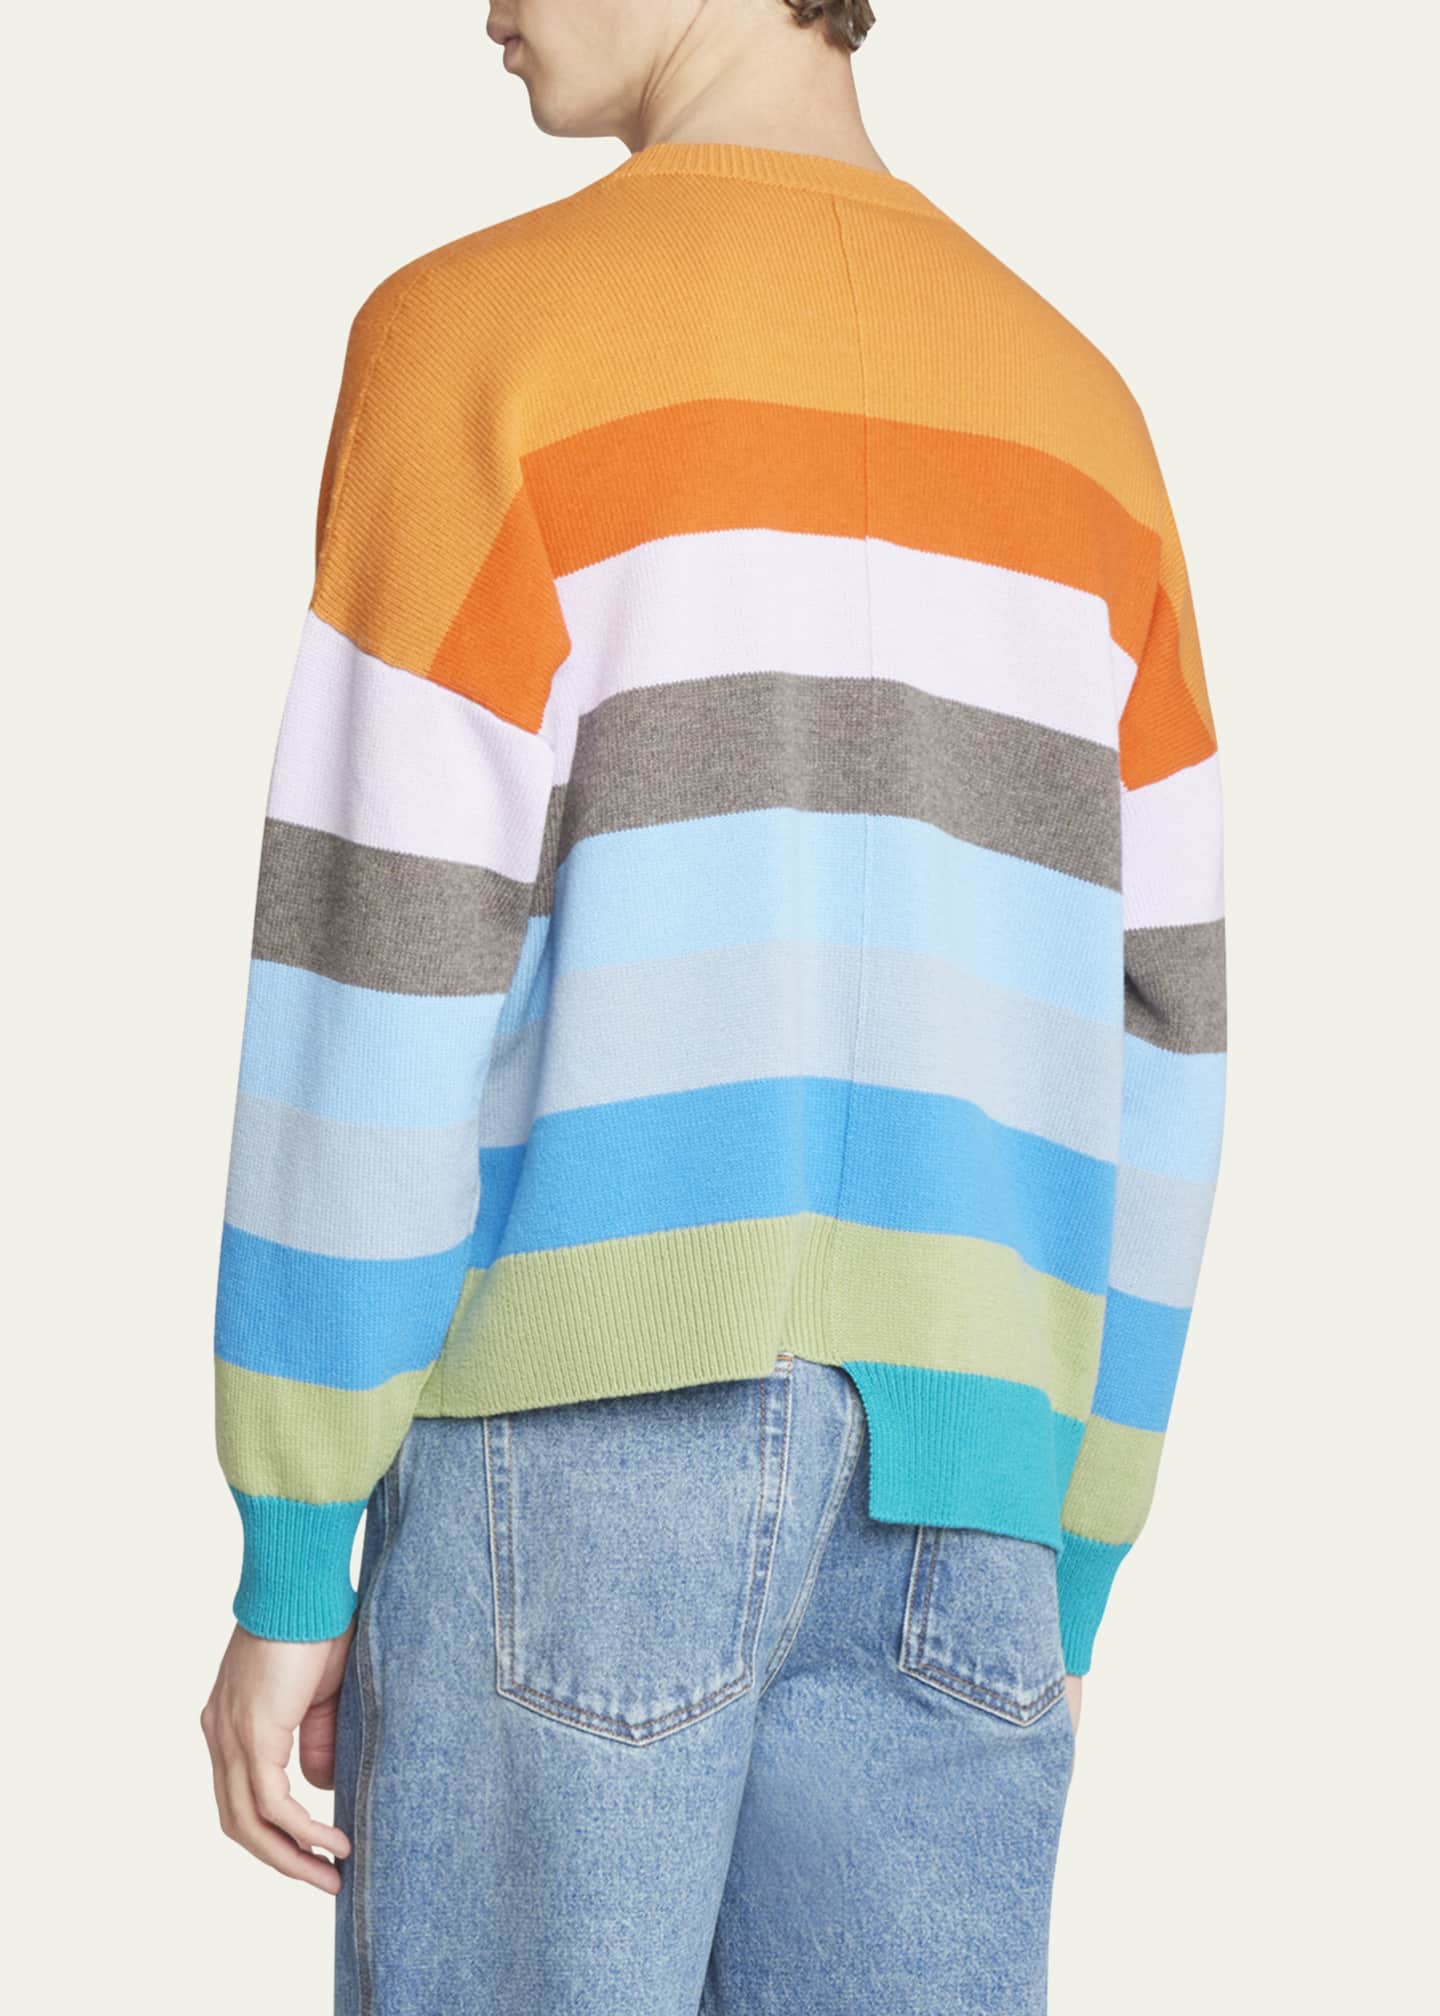 Loewe Men's Multicolor Block Striped Asymmetric Sweater - Bergdorf